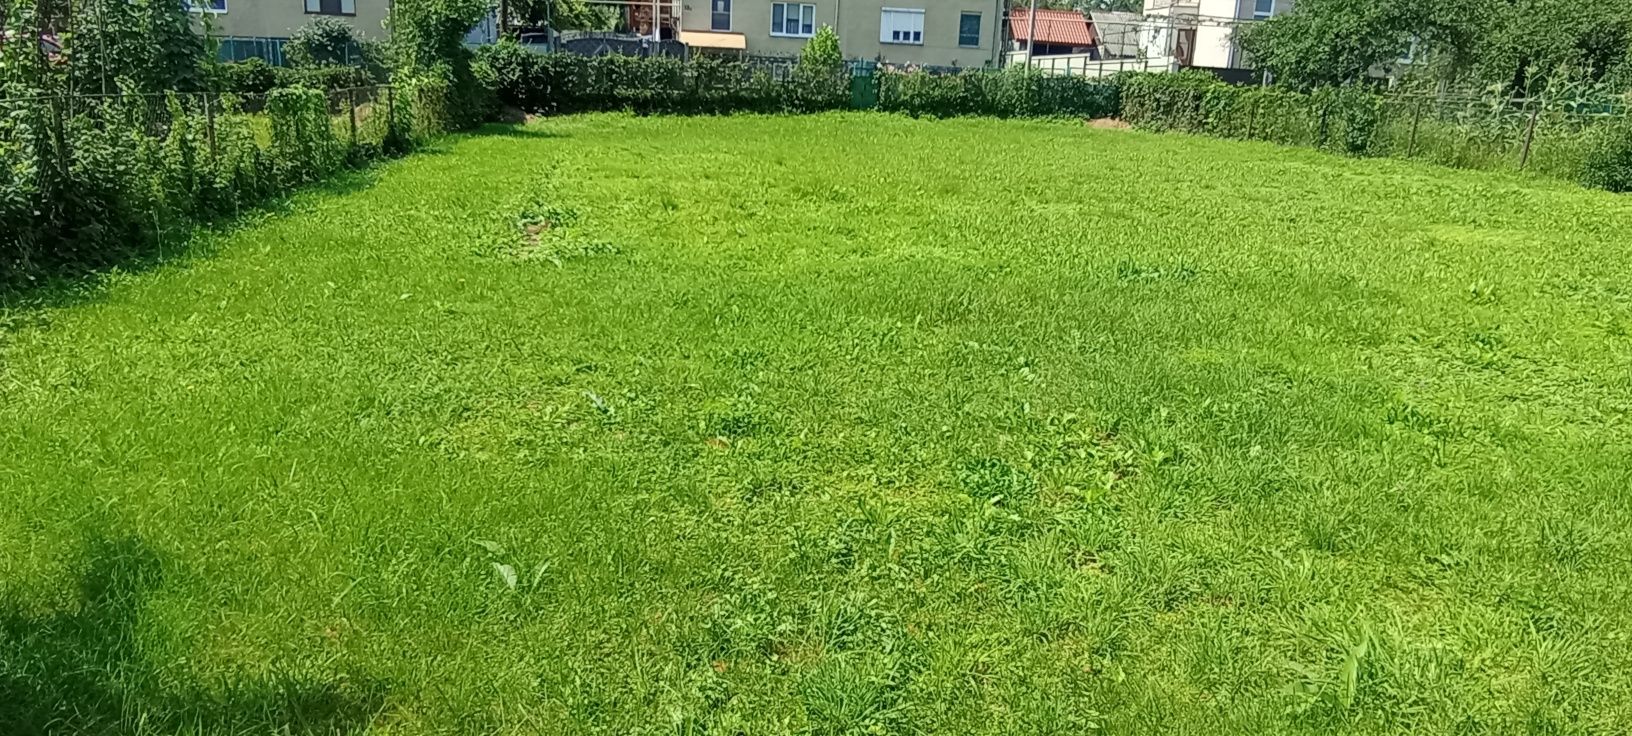 Продамо земельну ділянку з будинком Поляна Закарпатської